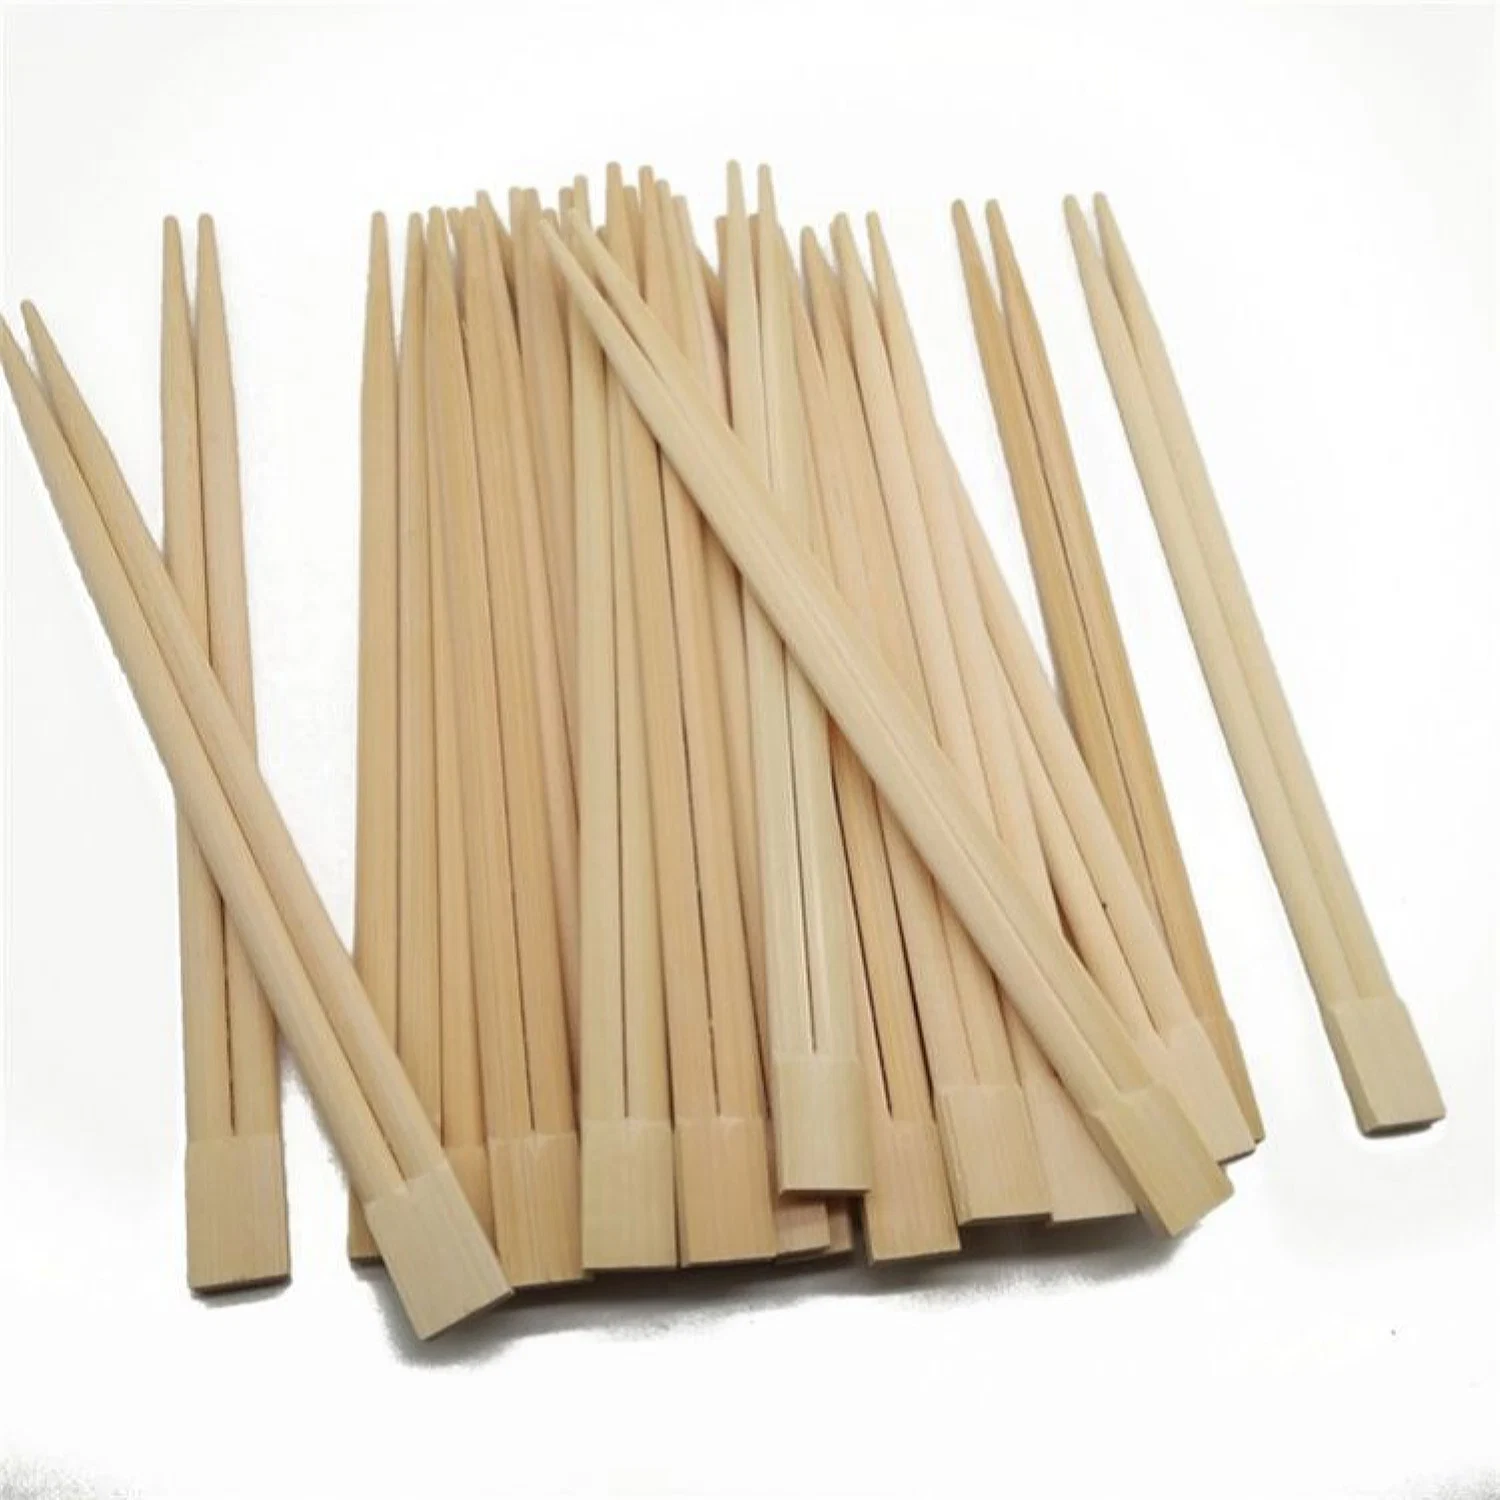 OEM aceptado Mayoristas Occidental Alta calidad única Chopsticks Embalaje Bambú Palillos desechables dobles con logotipo